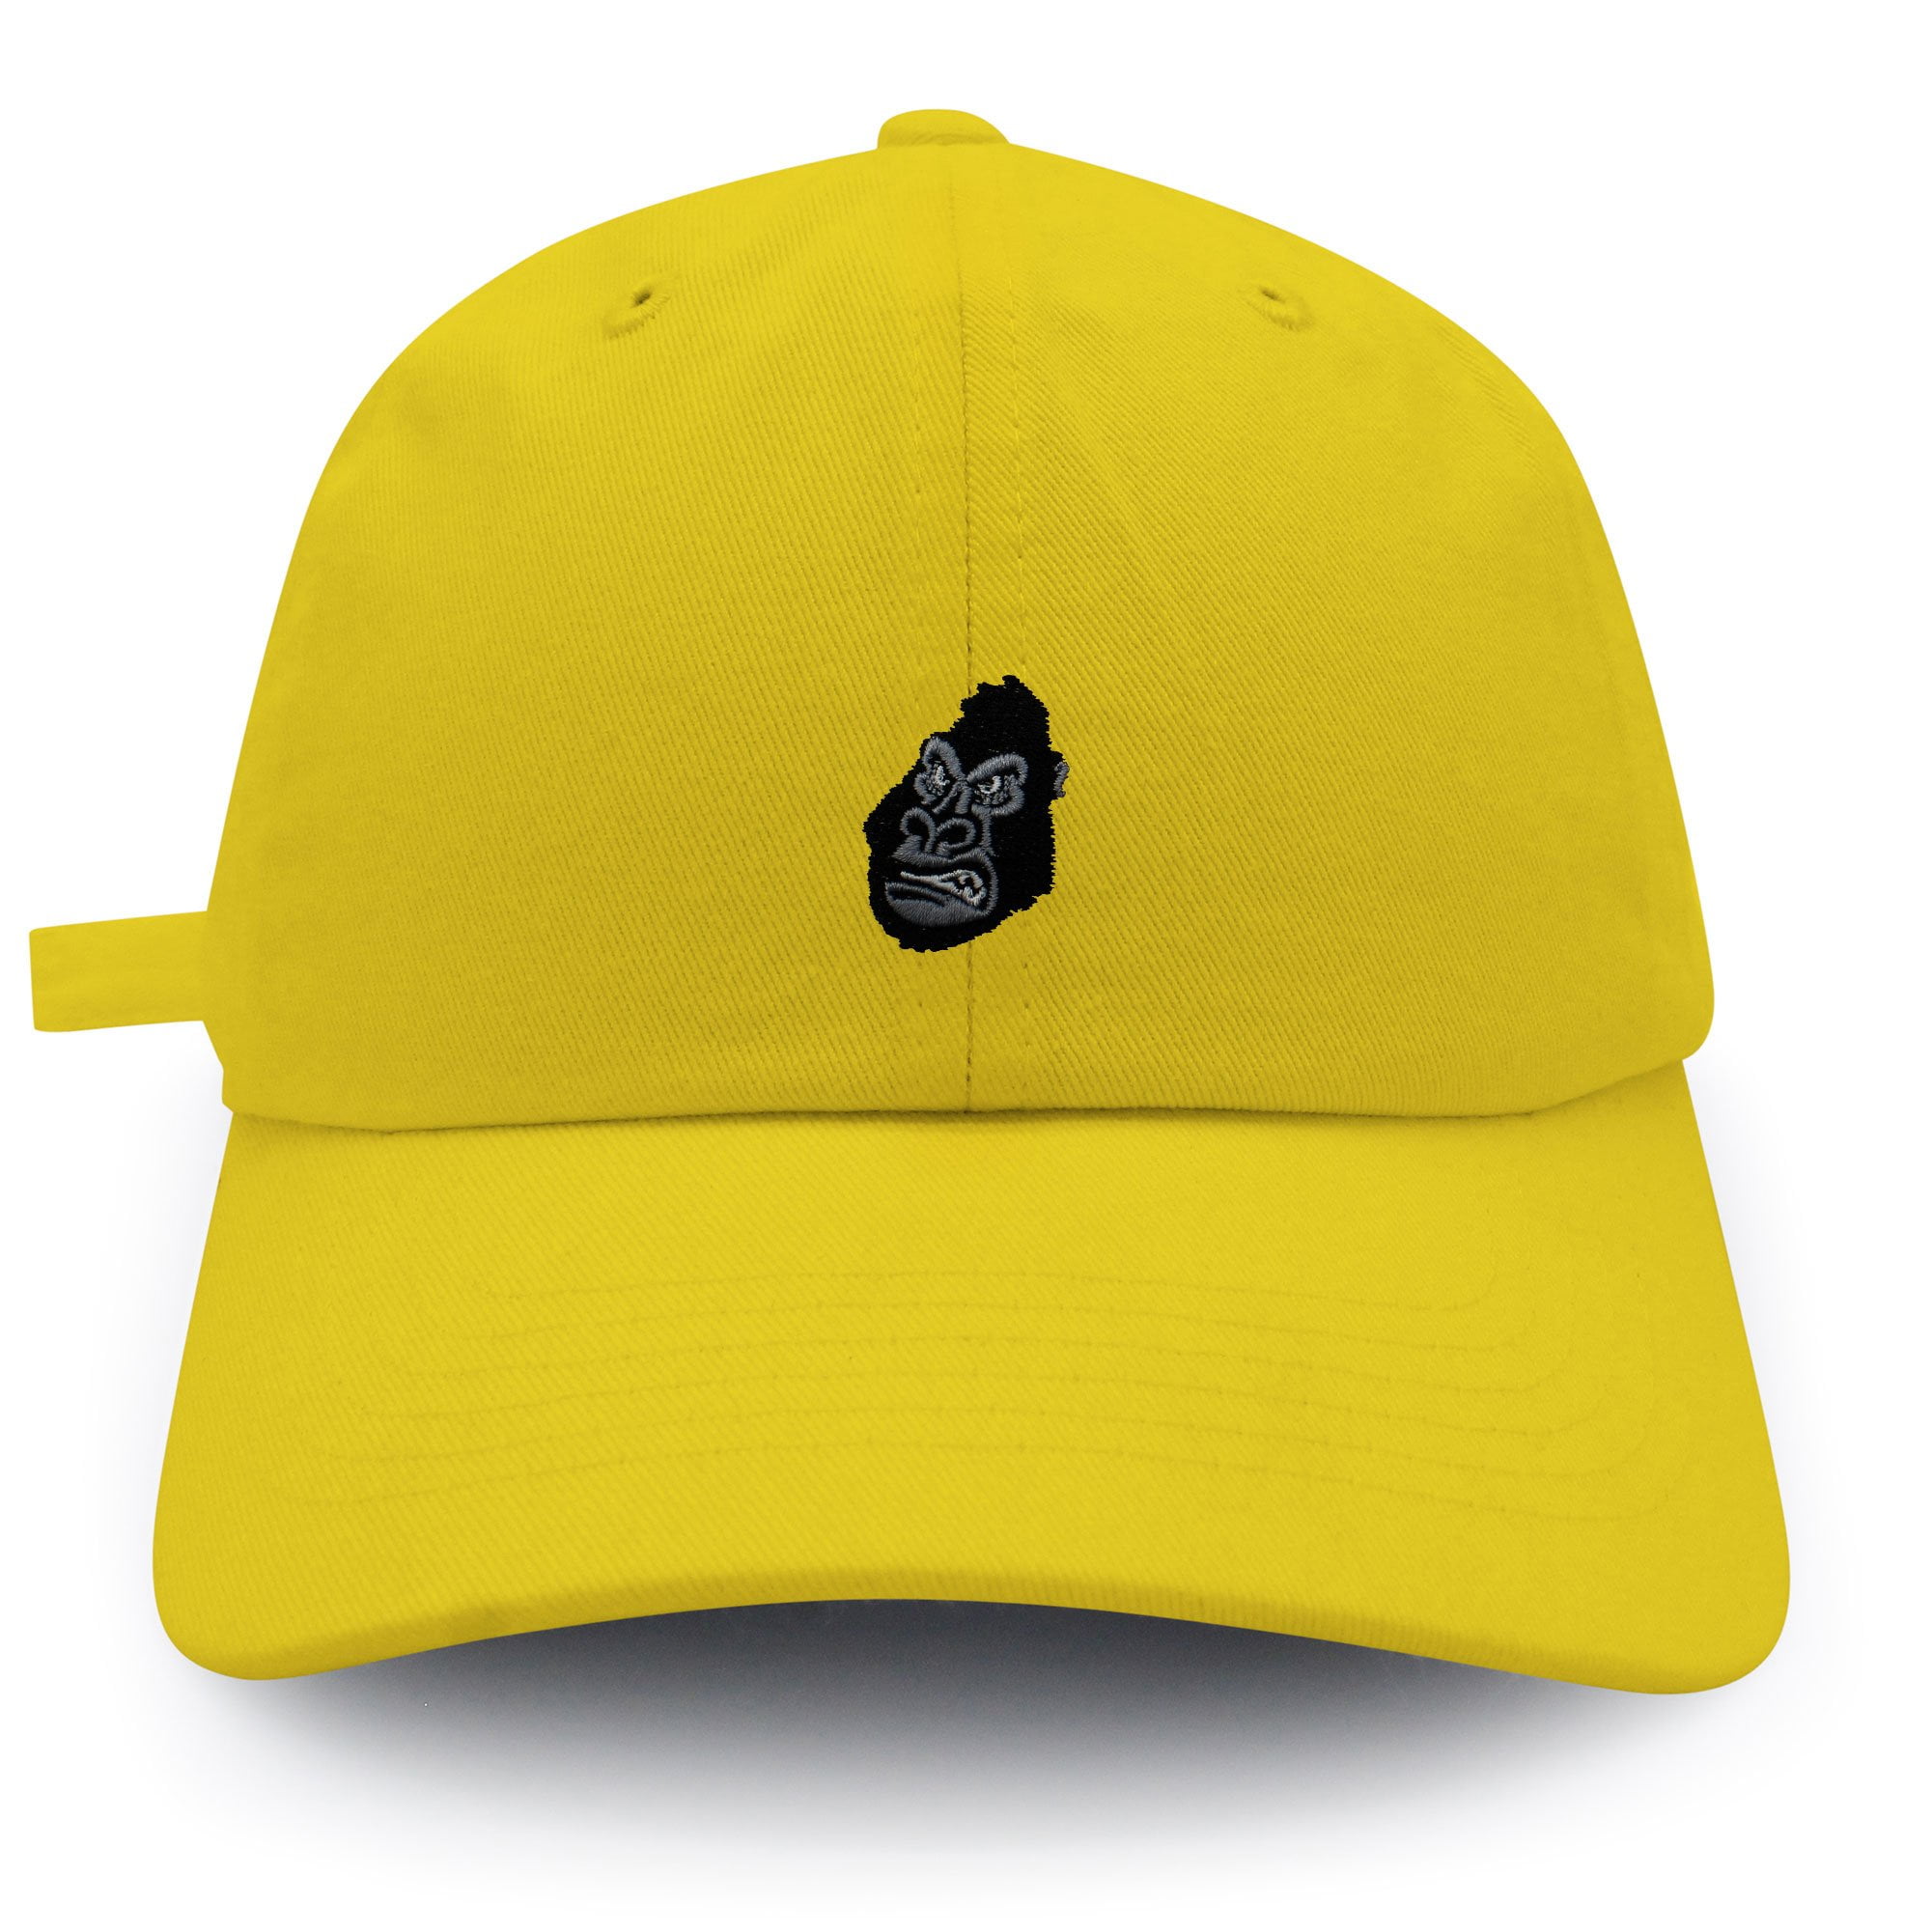 Gorilla Hand Dad Hat Unisex Cotton Hat Adjustable Baseball Cap